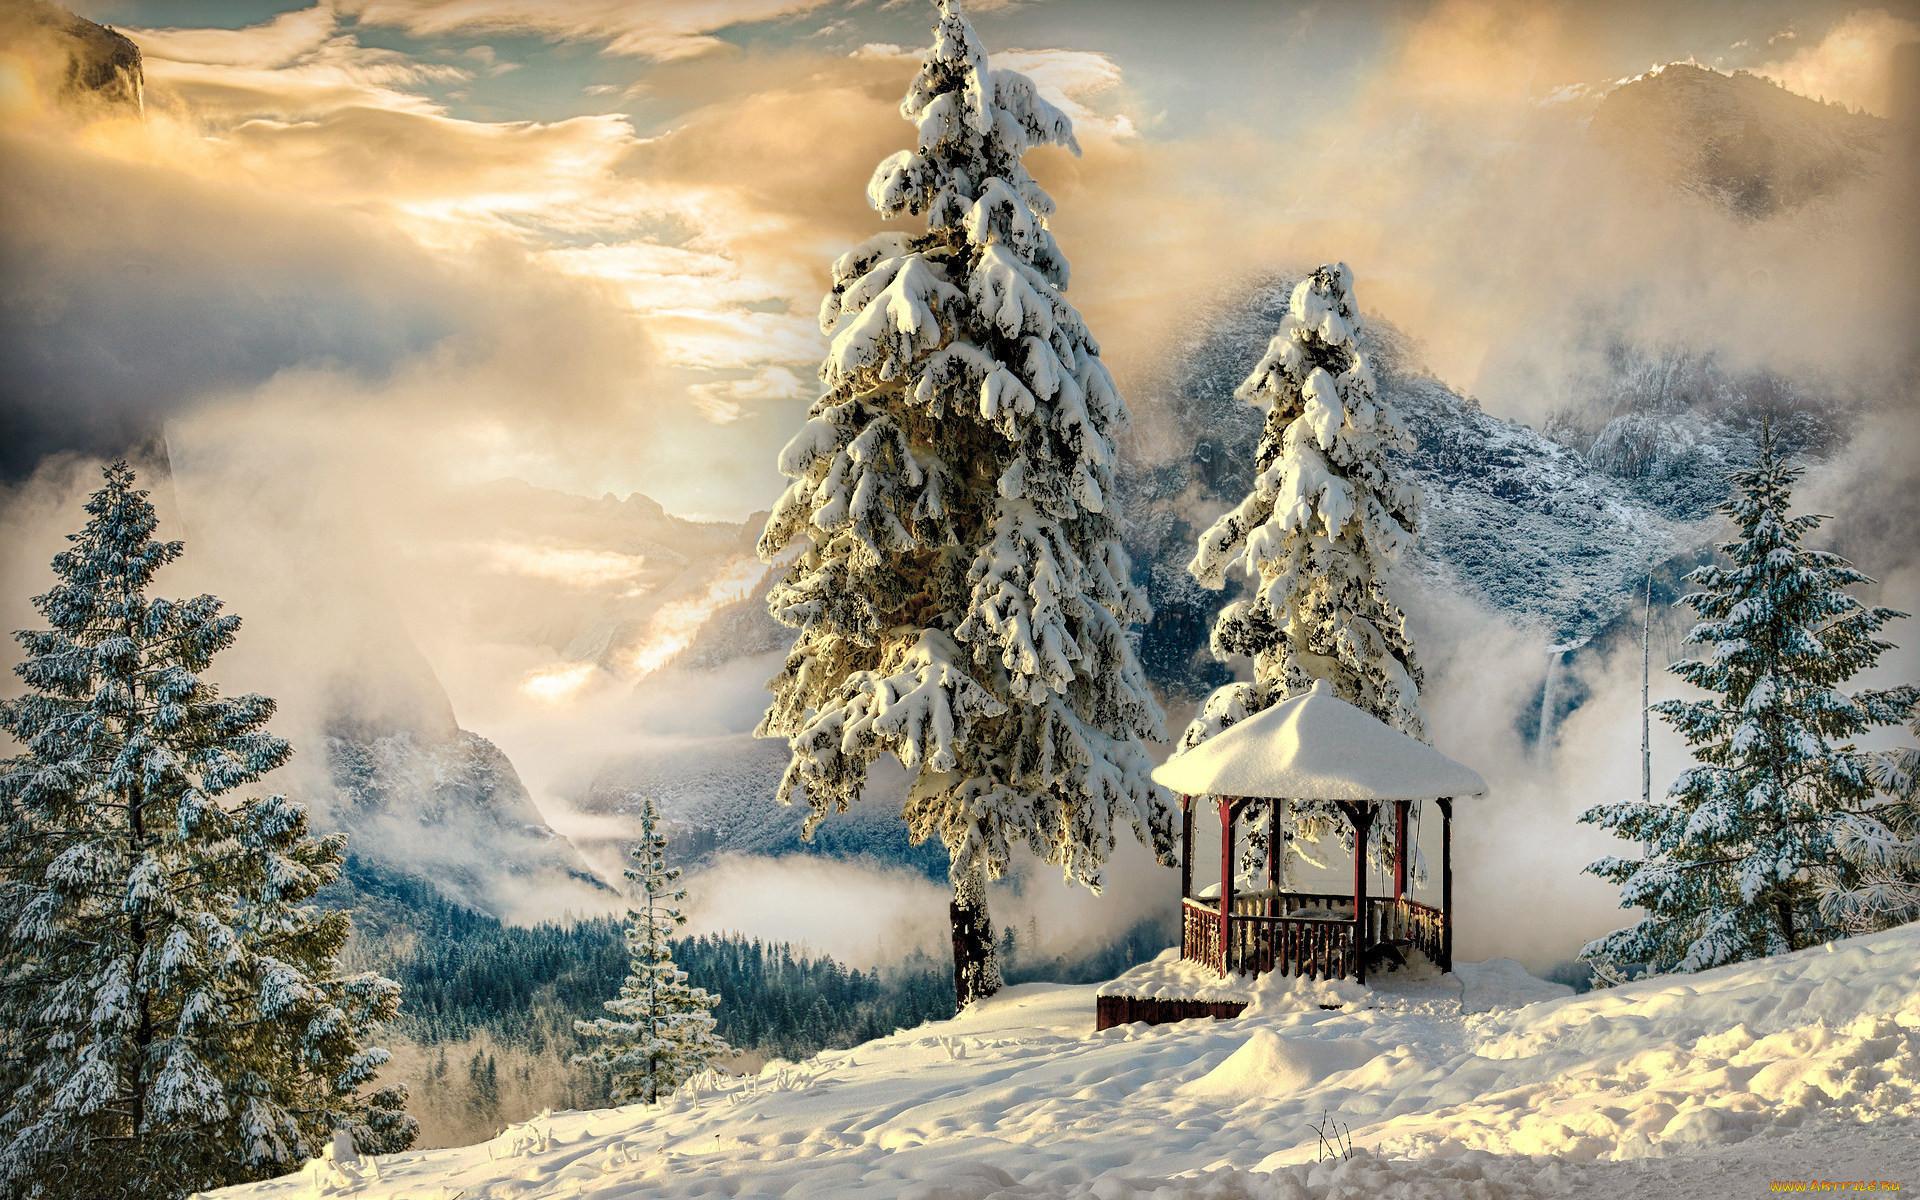 Картина зима в горах - обои для Iphone | Природа обои для Iphone